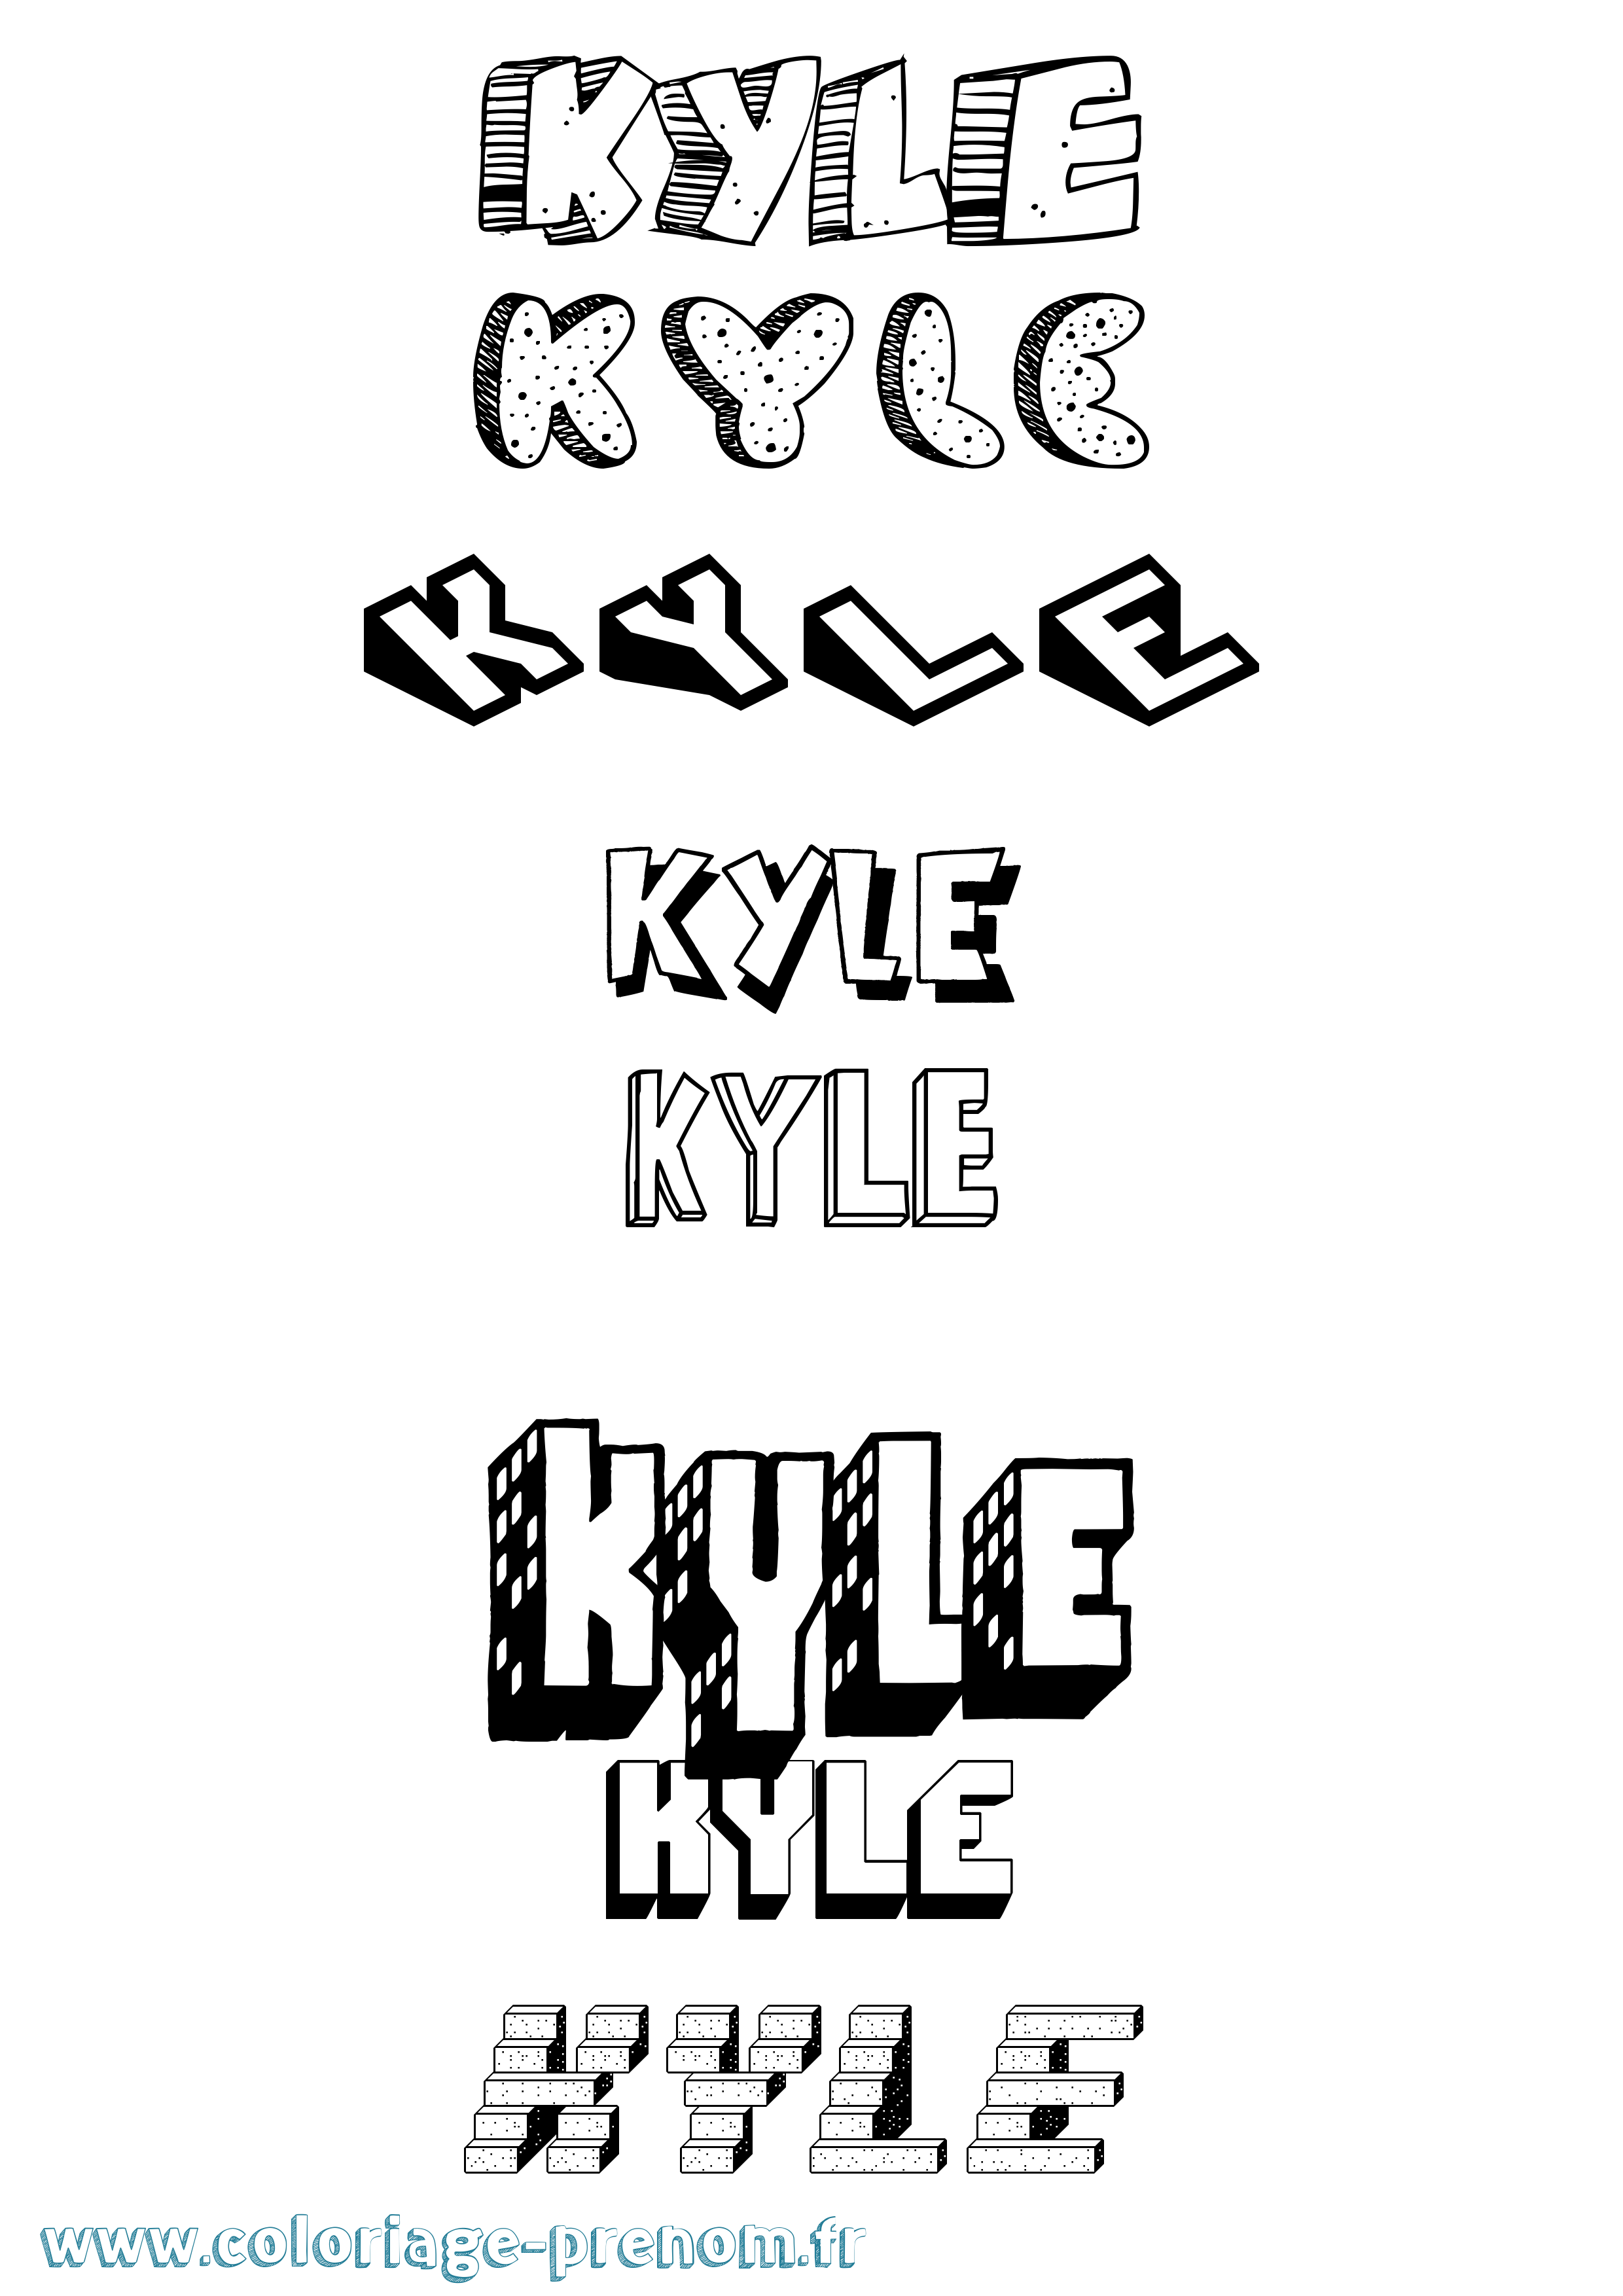 Coloriage prénom Kyle